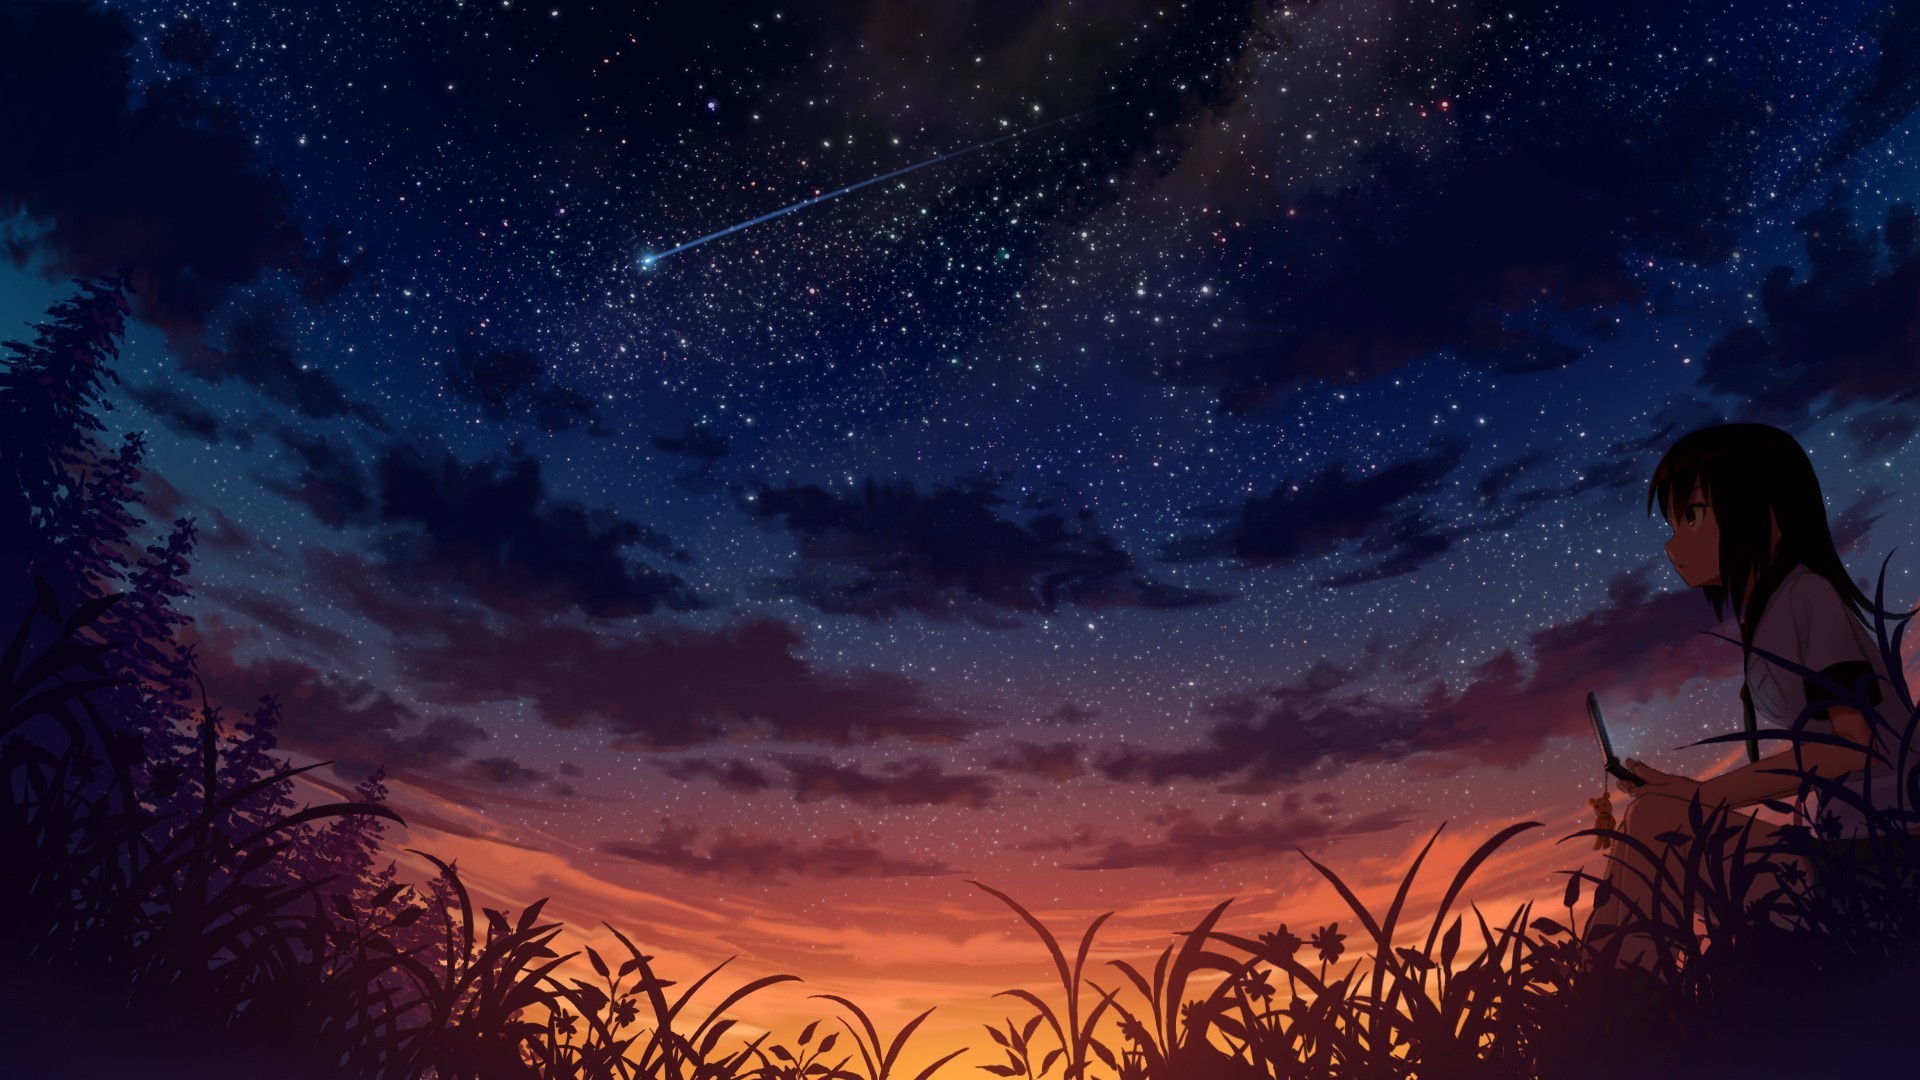 Scenery Wallpaper 1920a 1080 51395 Anime Scenery Starry Sky